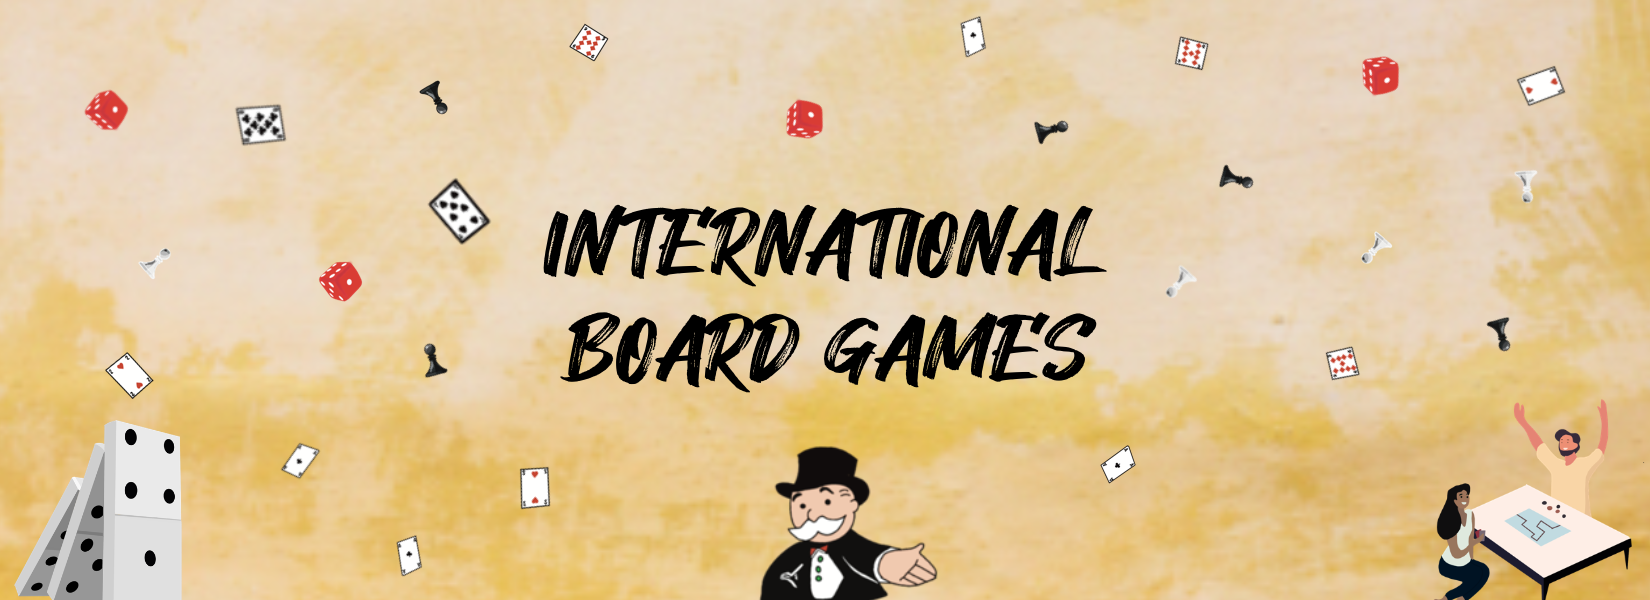 International board games event (Part.4)